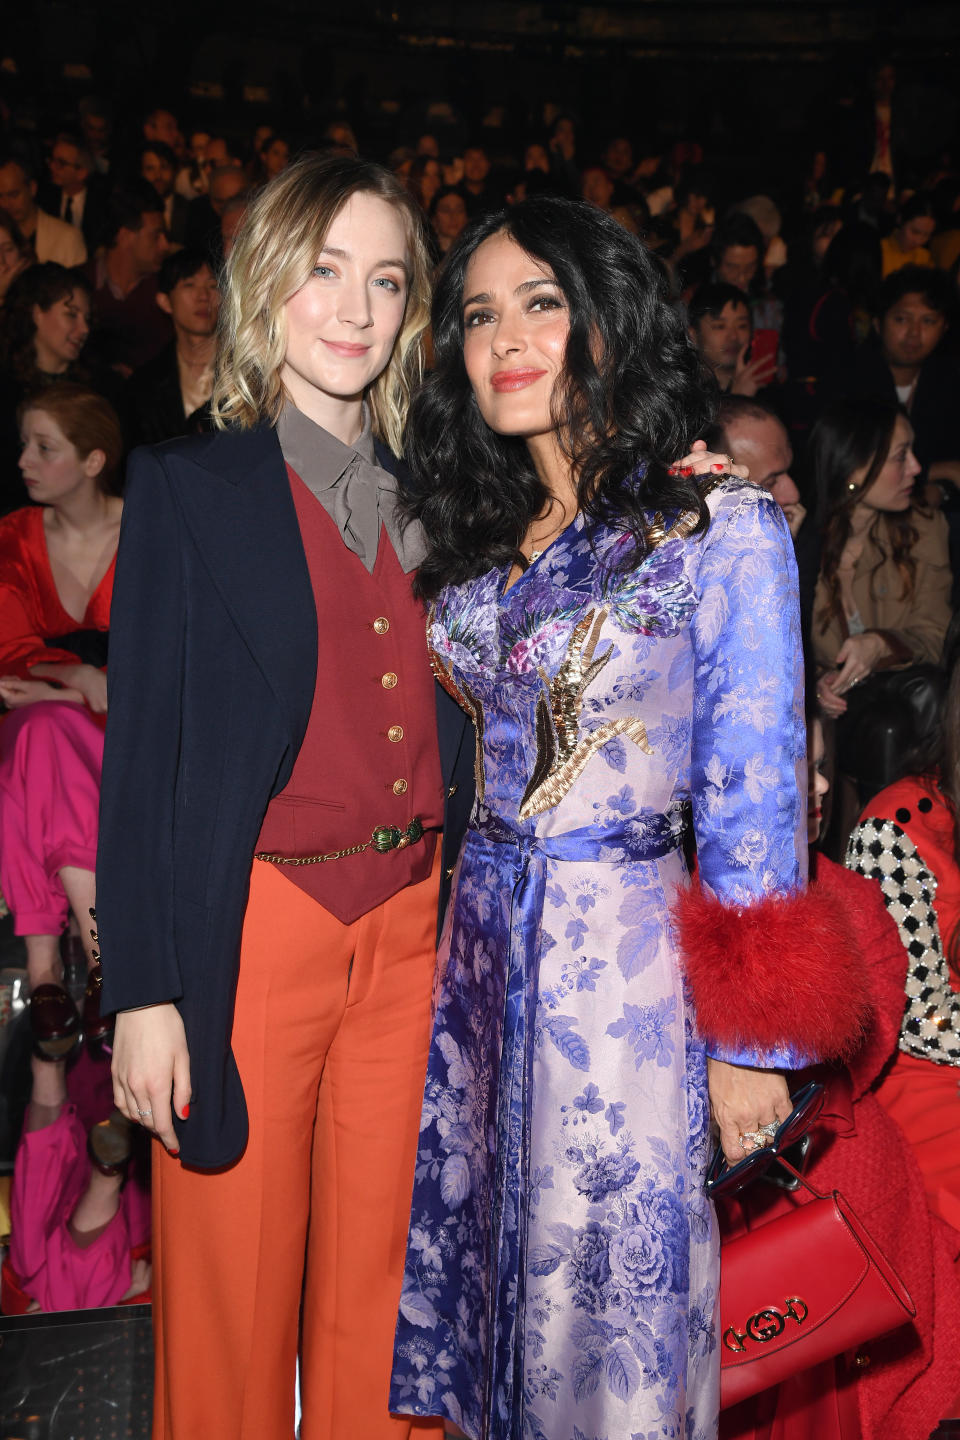 Saoirse Ronan and Salma Hayek at the Gucci February 2019 show during Milan Fashion Week